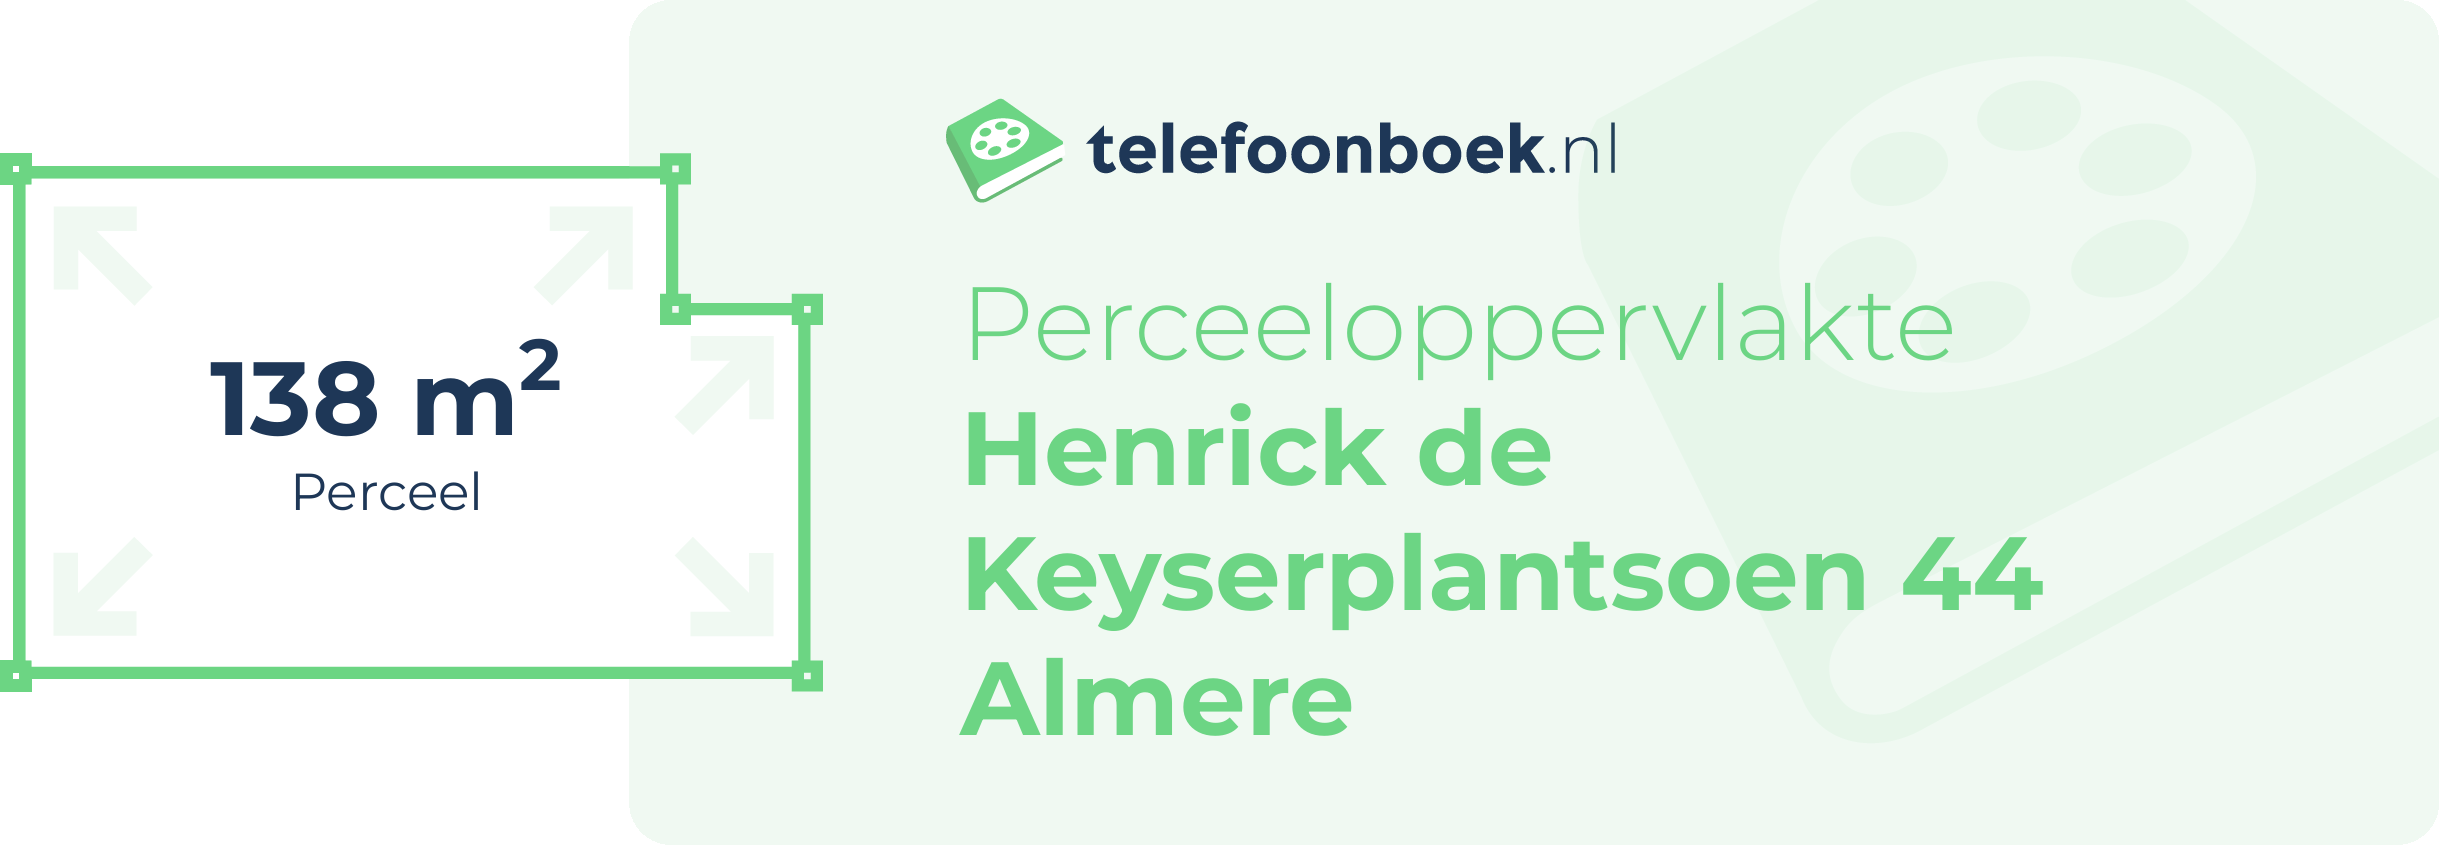 Perceeloppervlakte Henrick De Keyserplantsoen 44 Almere